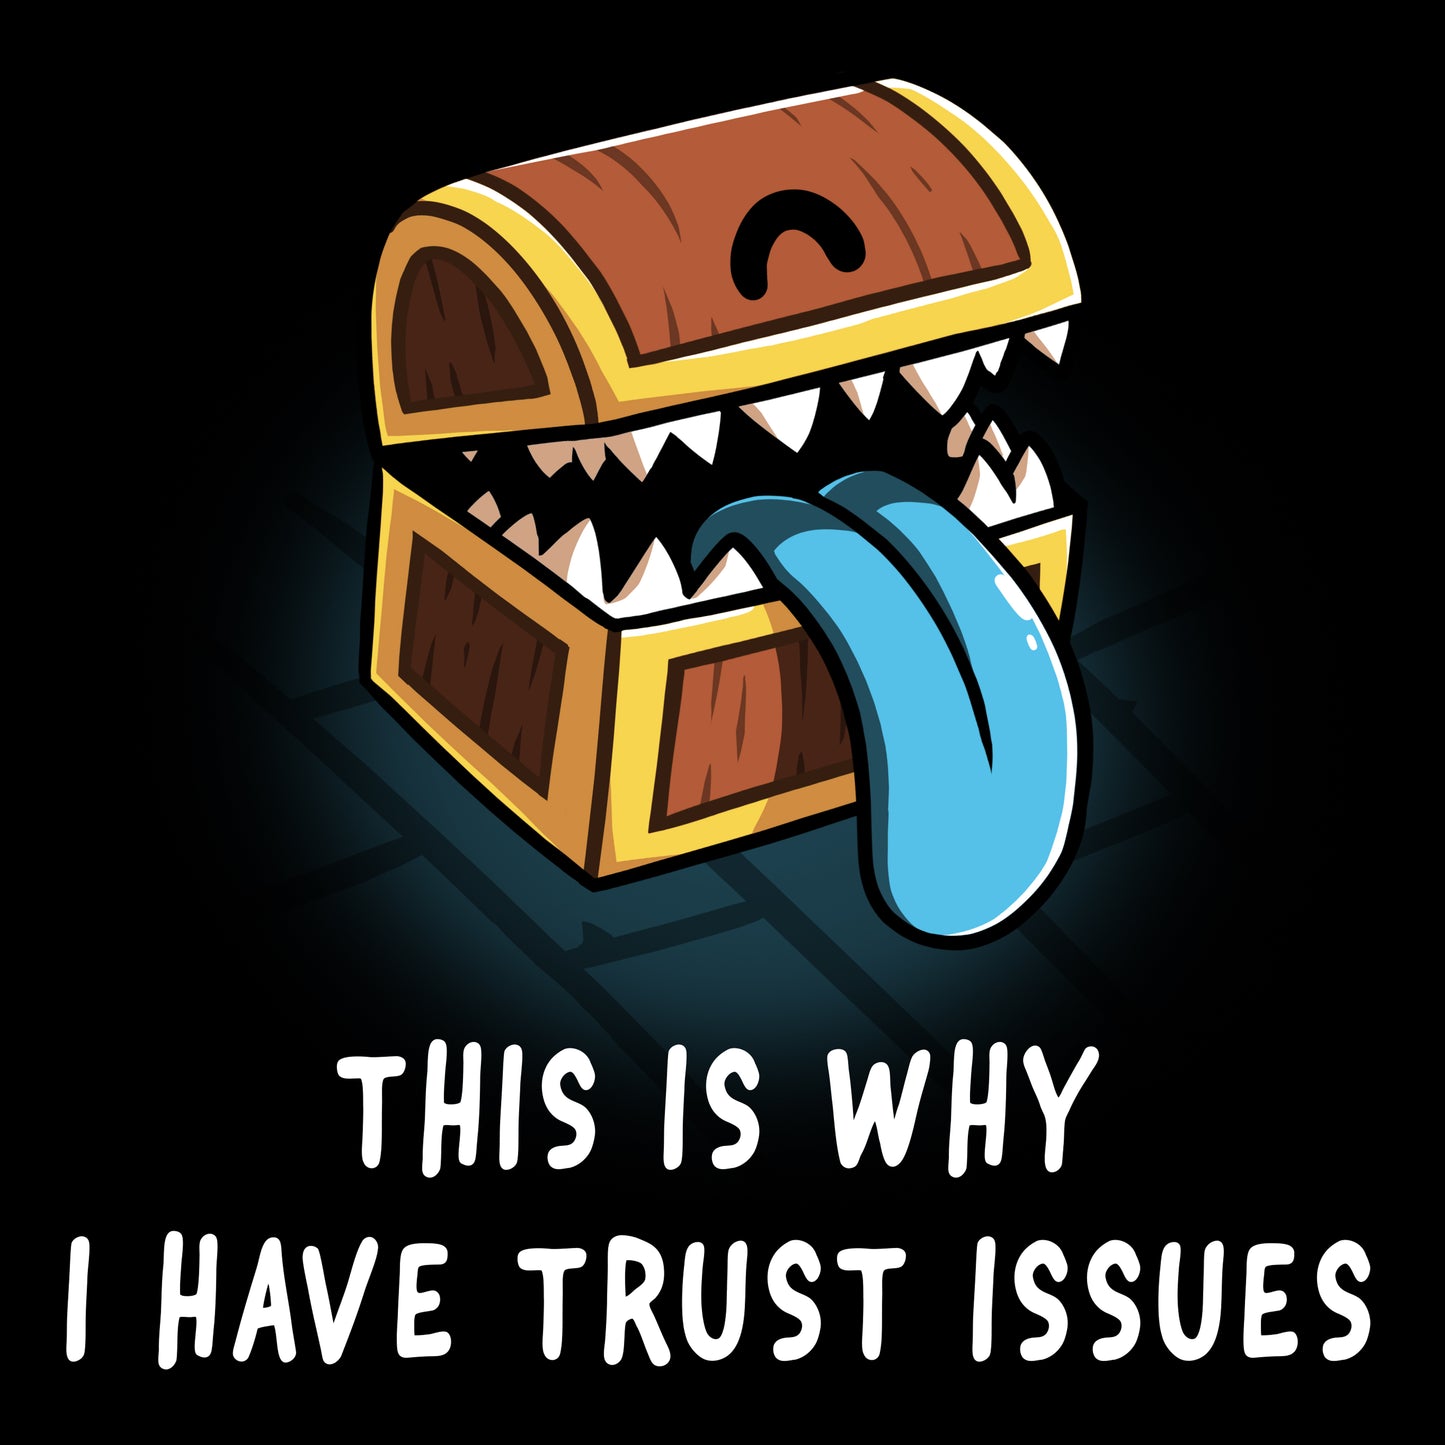 The TeeTurtle Trust Issues T-shirt exacerbates trust issues.